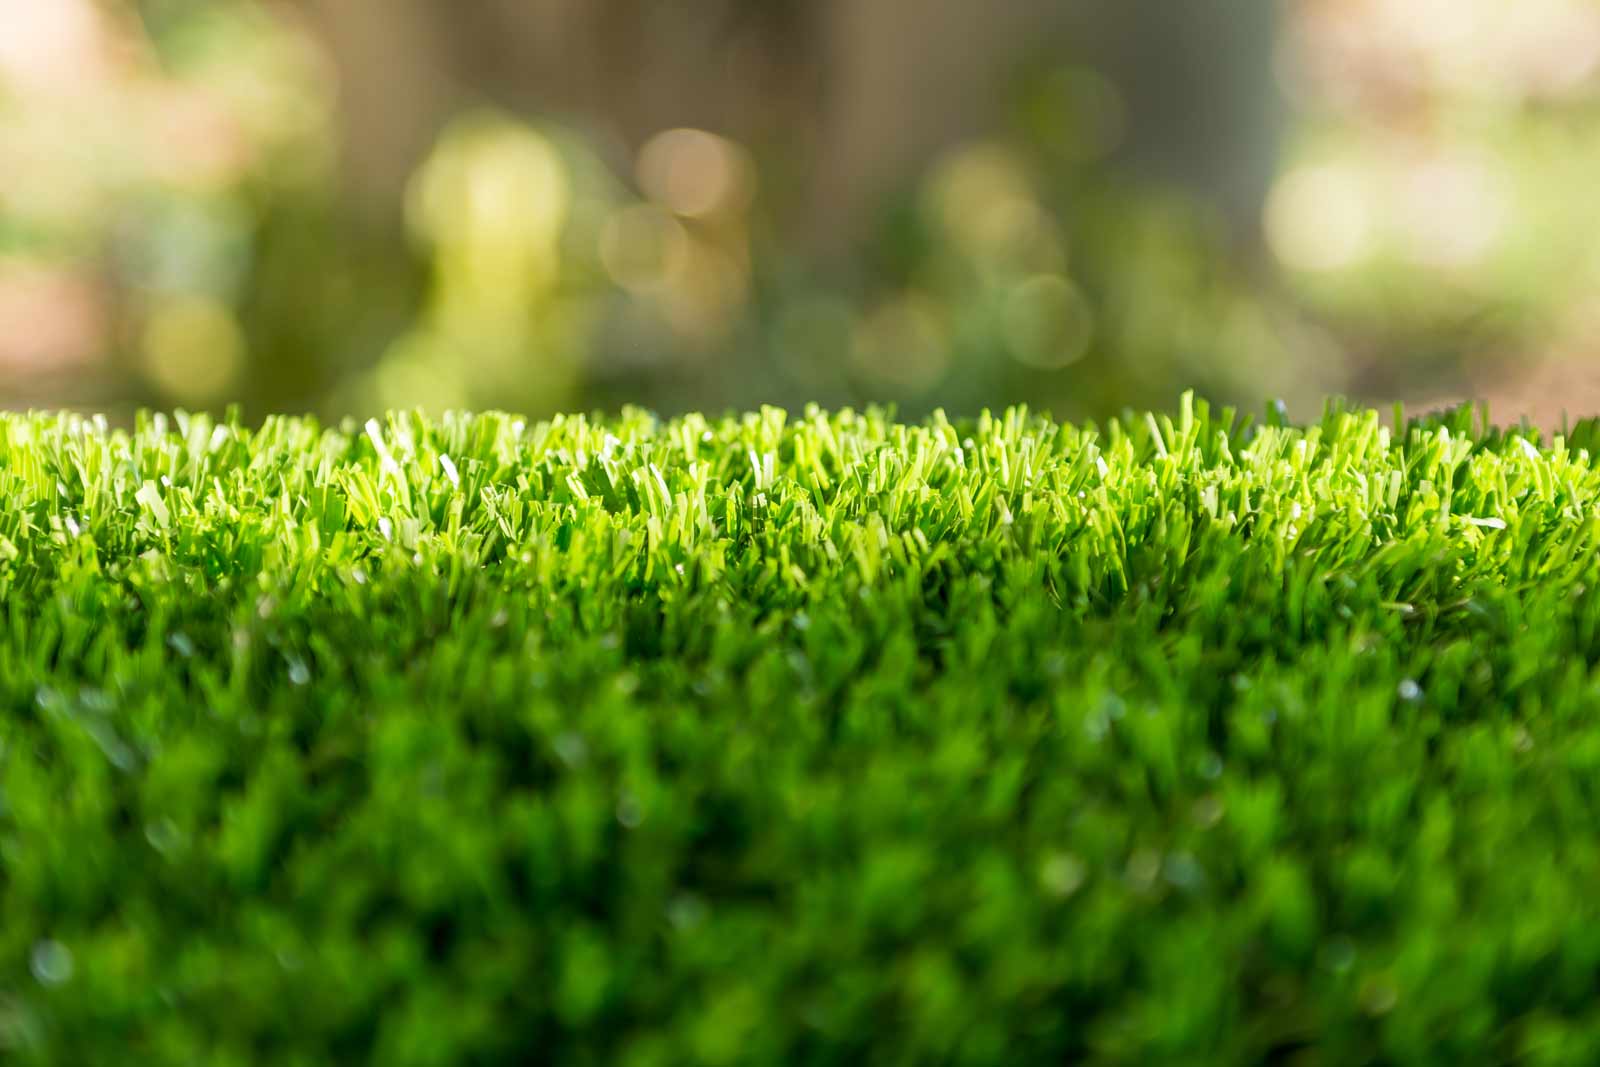 Benefits of Turf Grass